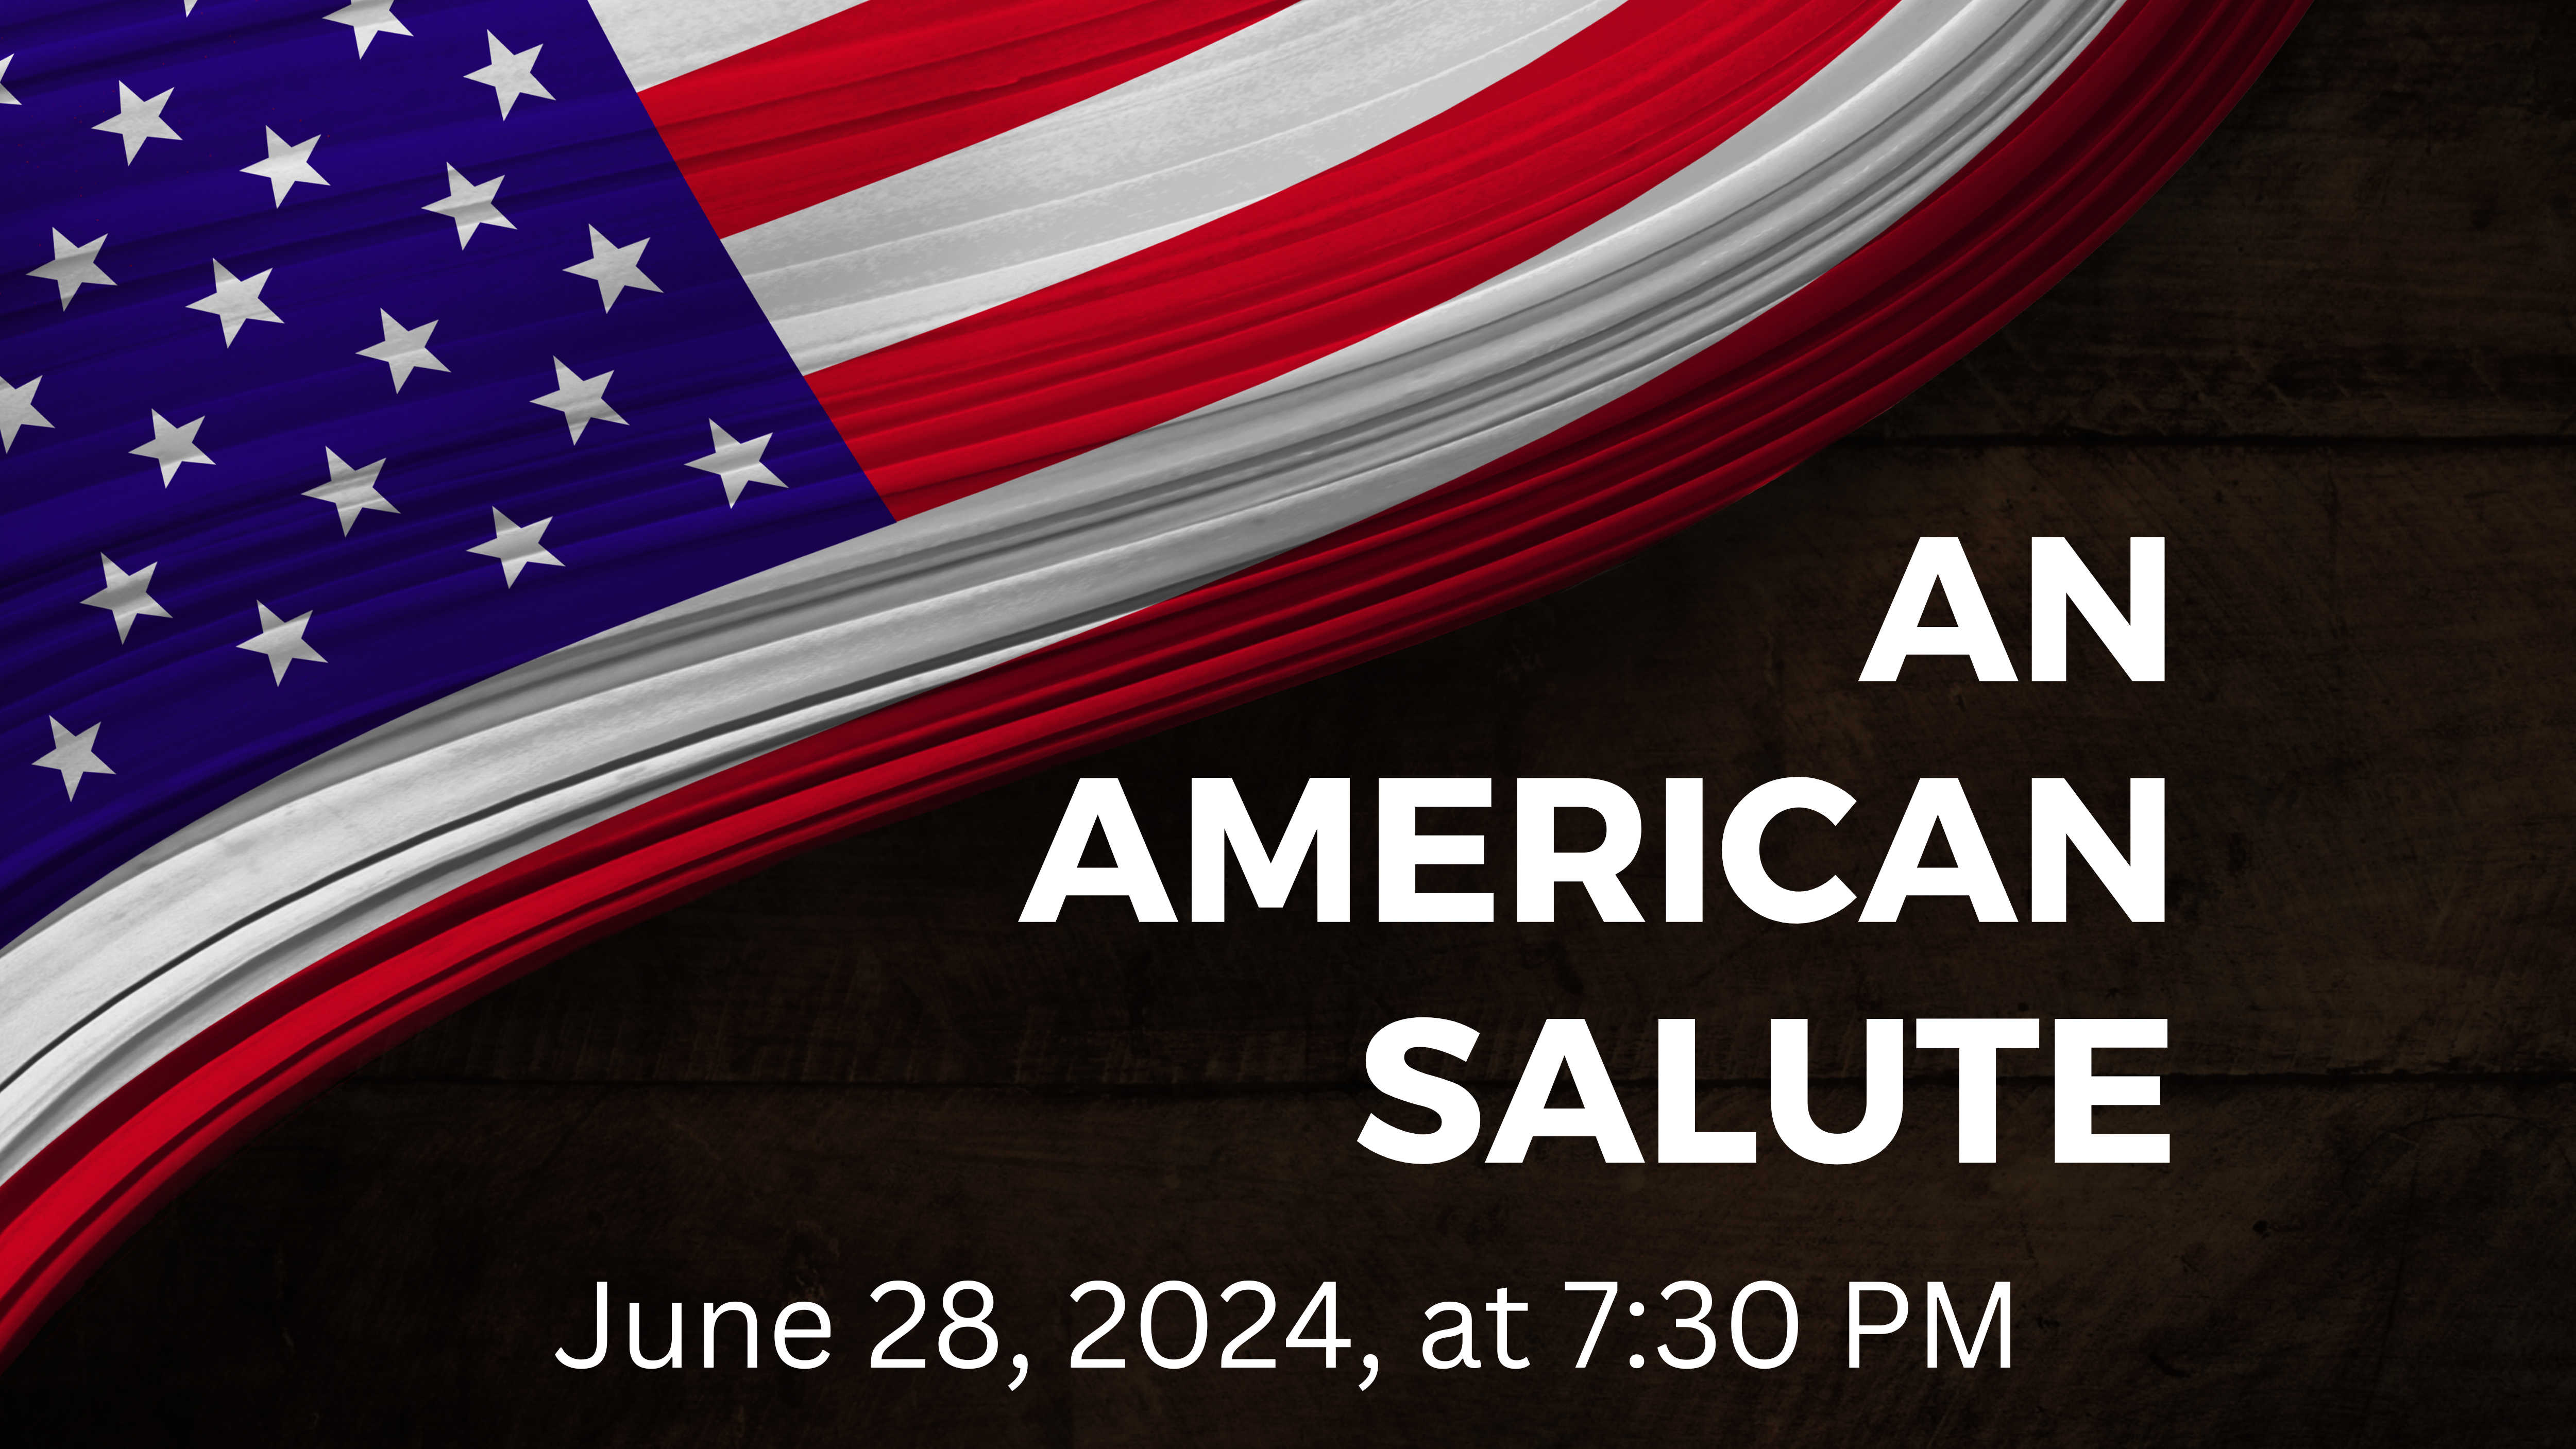 An American Salute June 28 2024 at 7:30 pm